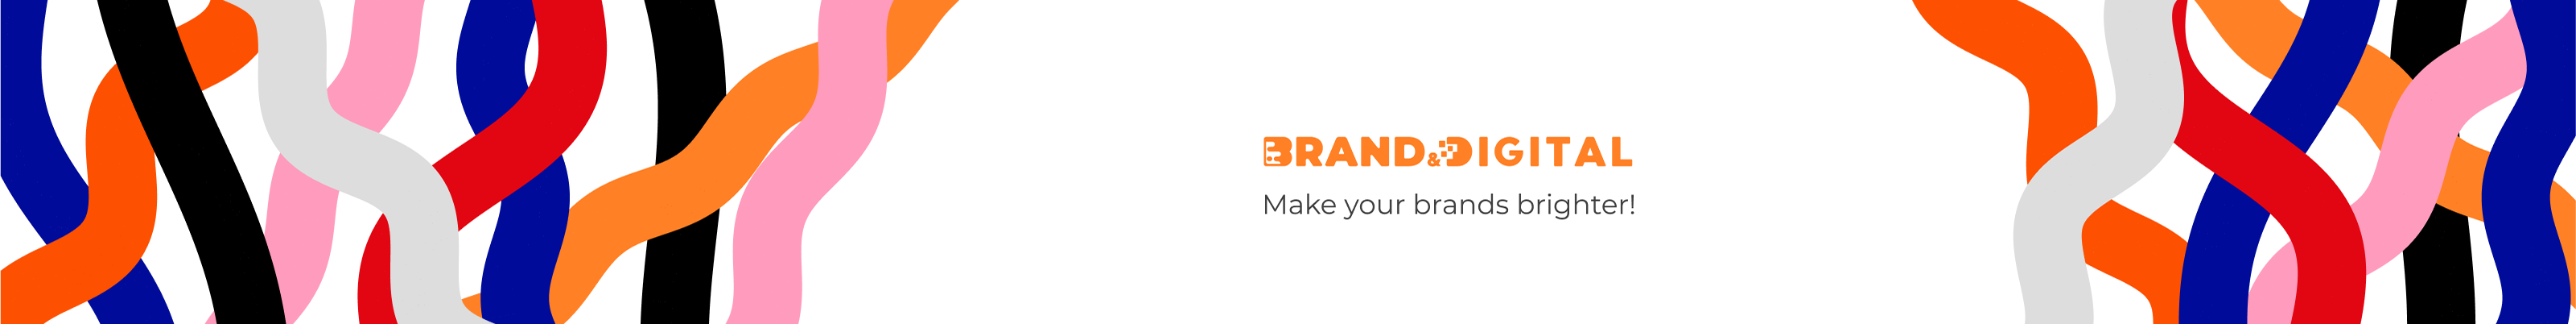 Brand & Digital's profile banner